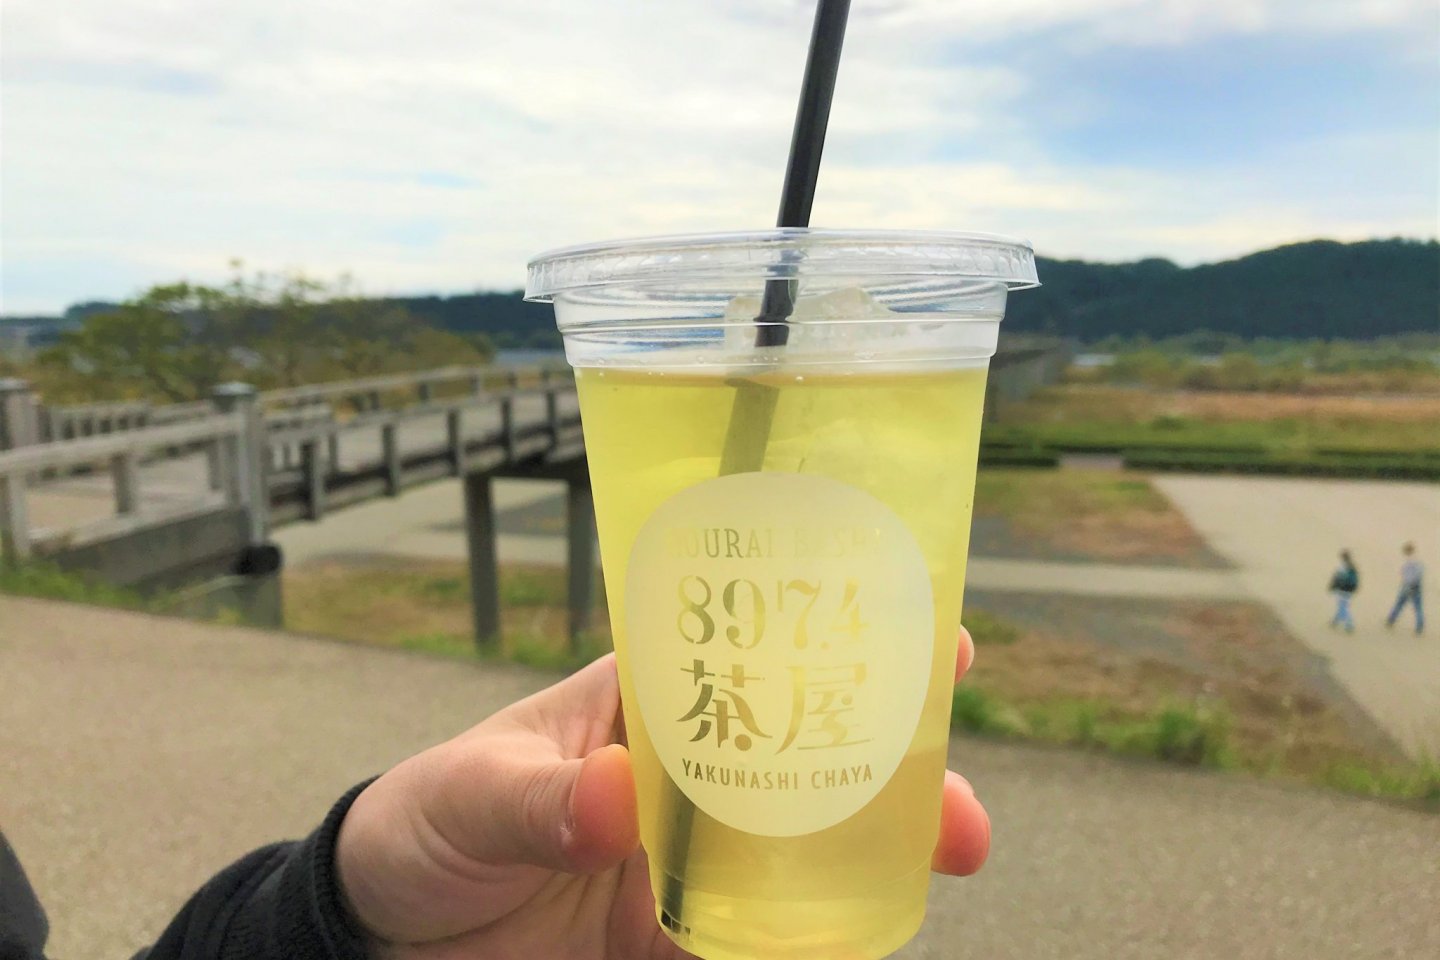 Enjoying a refreshing iced green tea alongside the Horai Bridge!